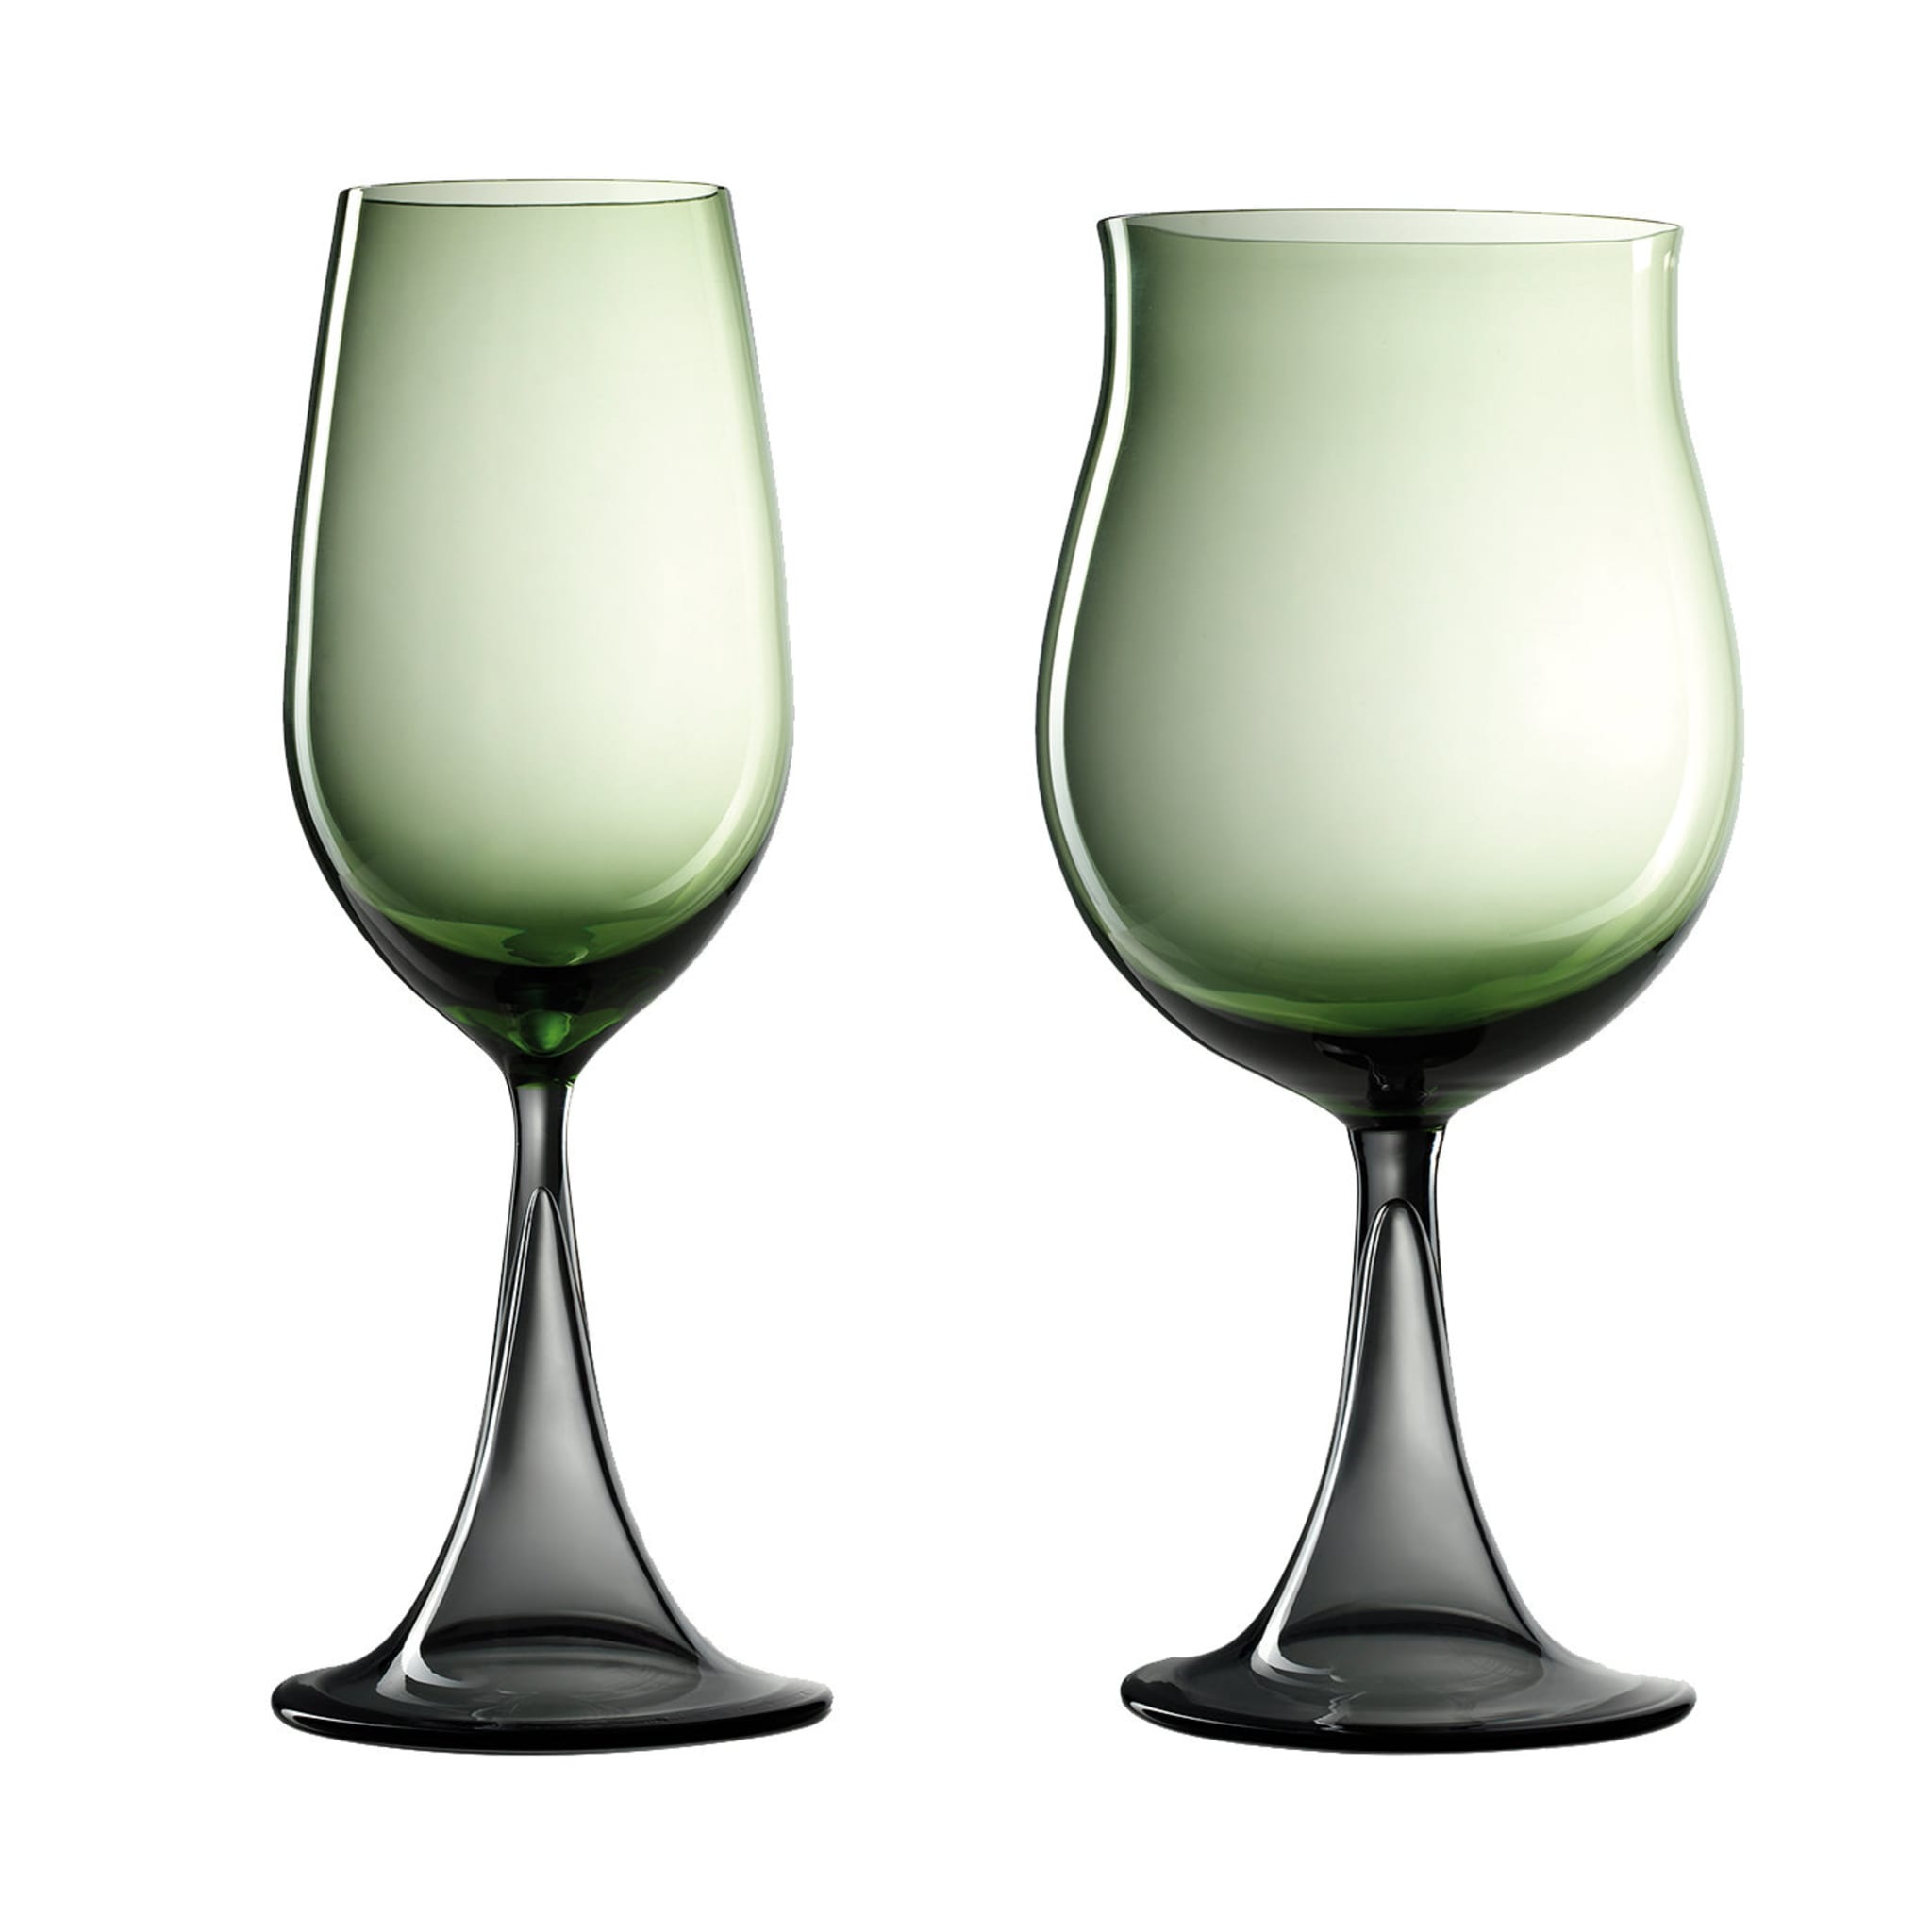 Set of two Murano glass wine glasses